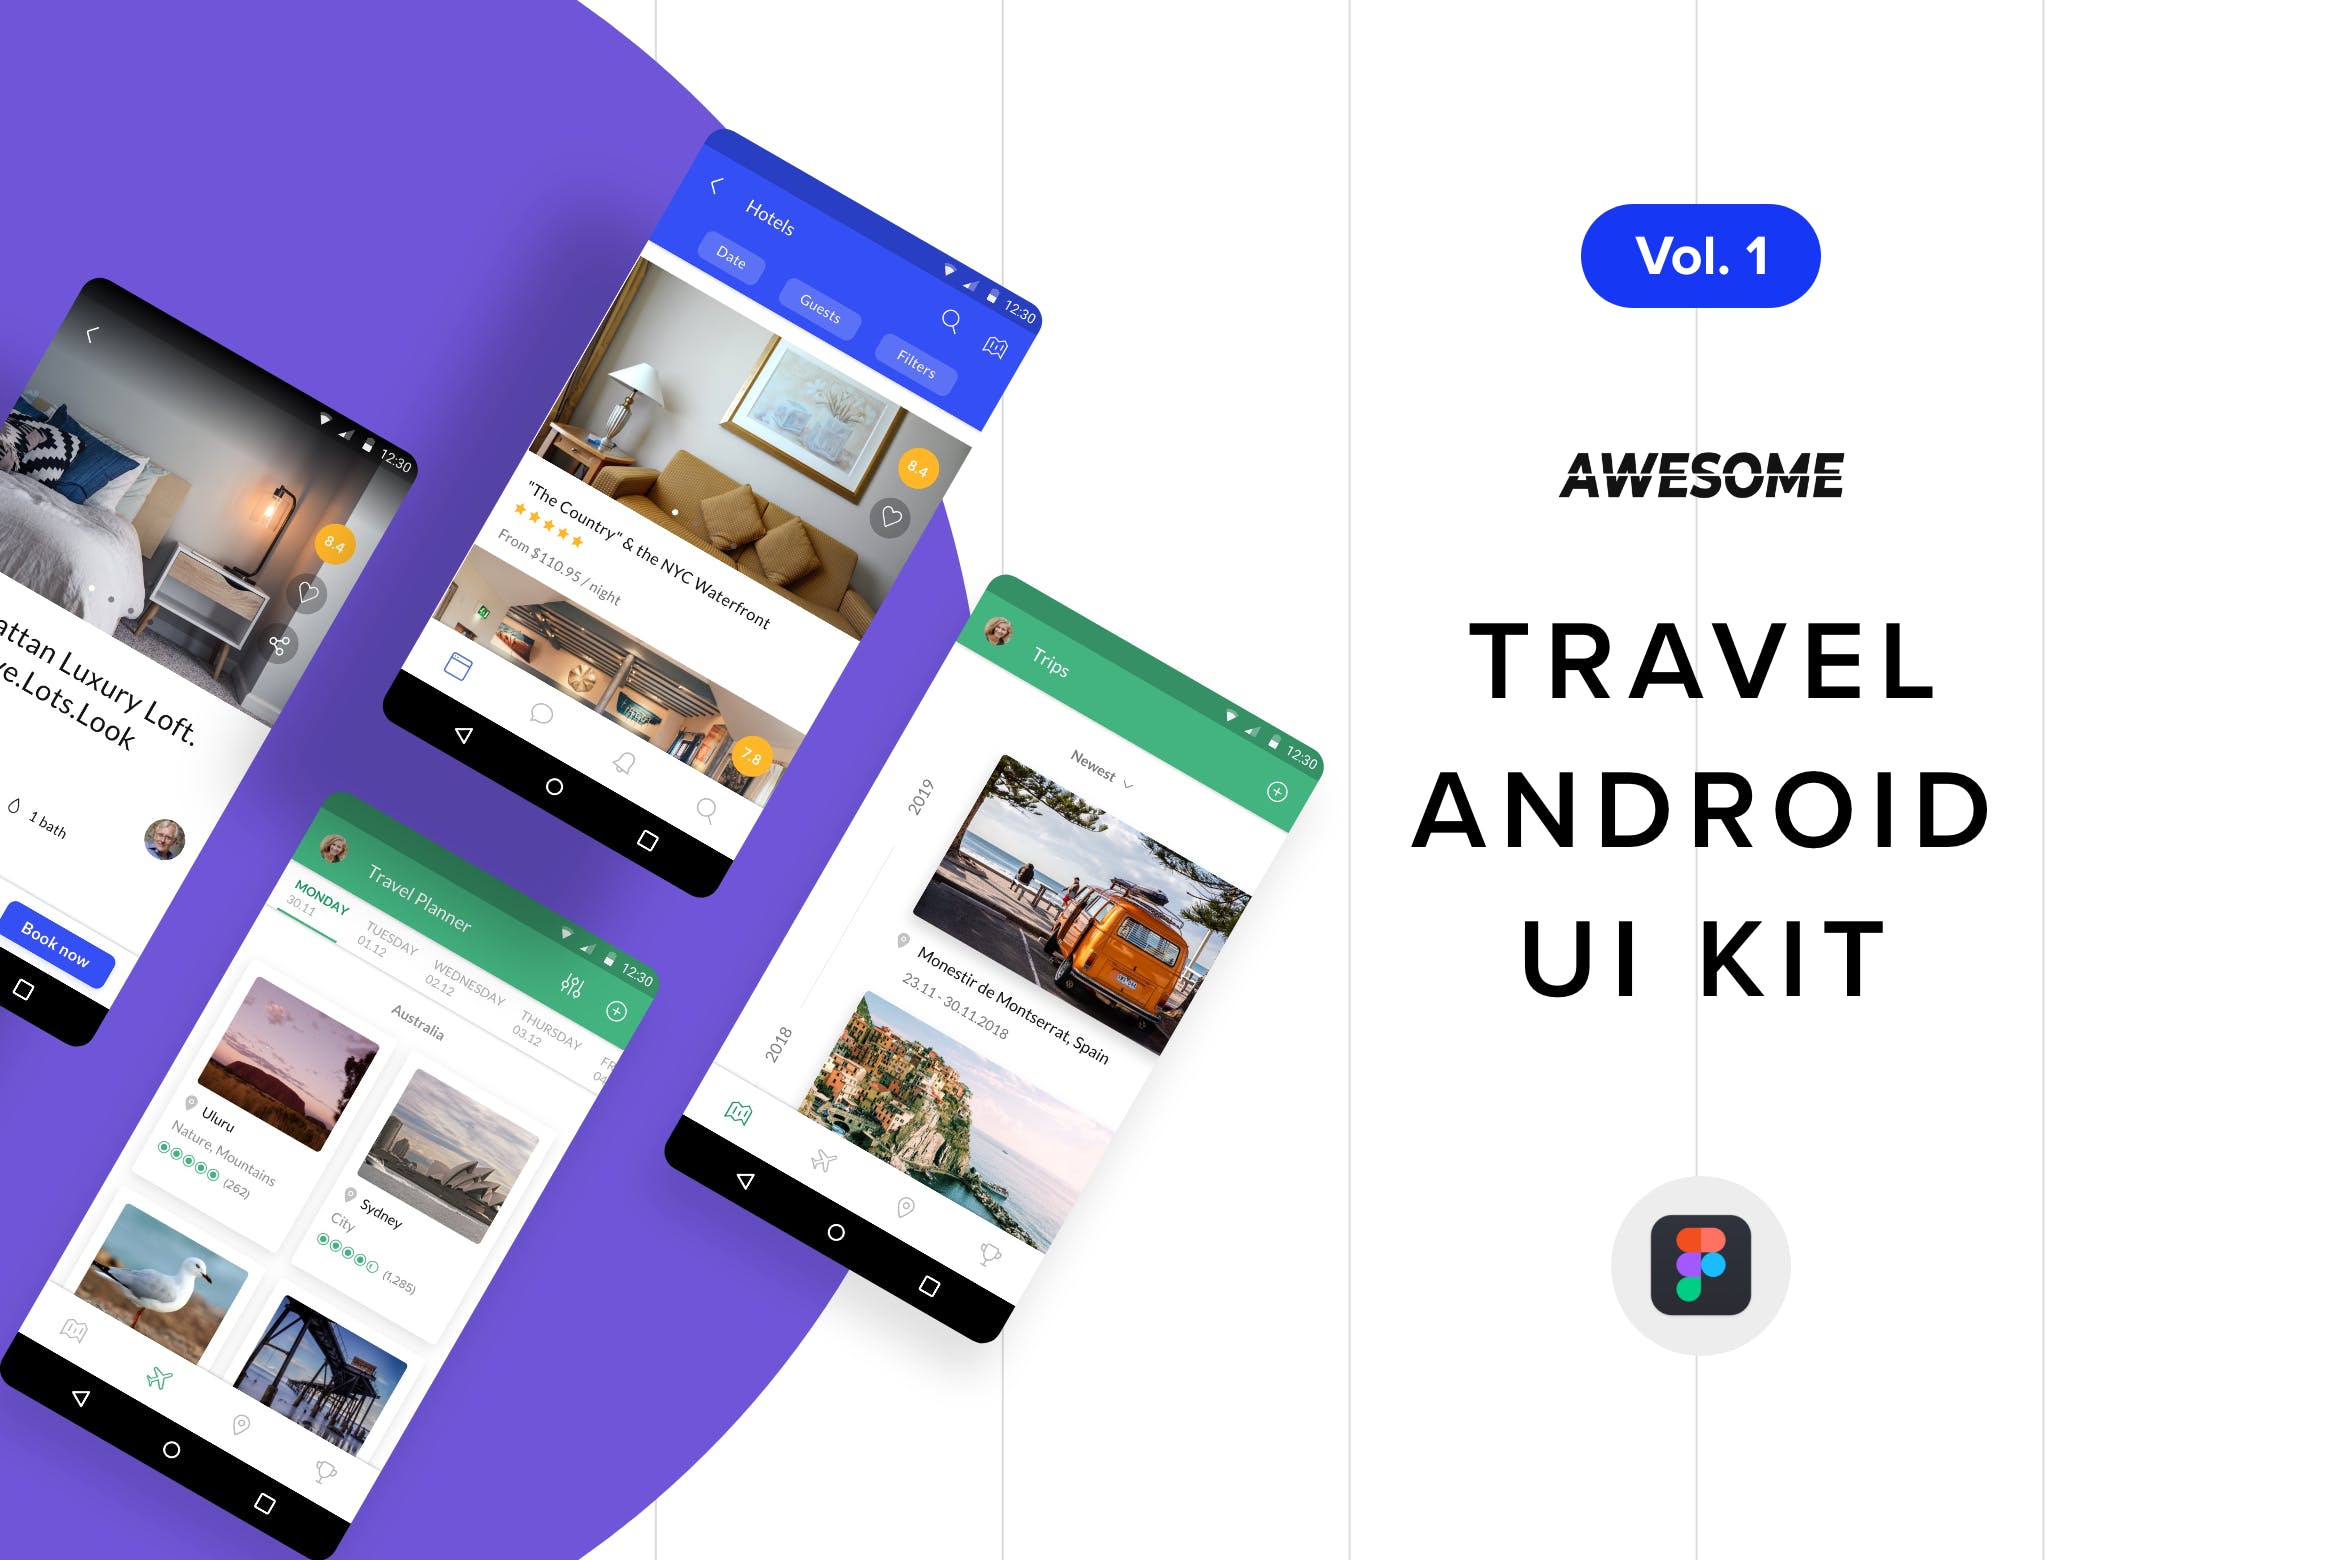 安卓手机平台旅游APP应用UI设计套件v1[Figma] Android UI Kit – Travel Vol. 1 (Figma)插图